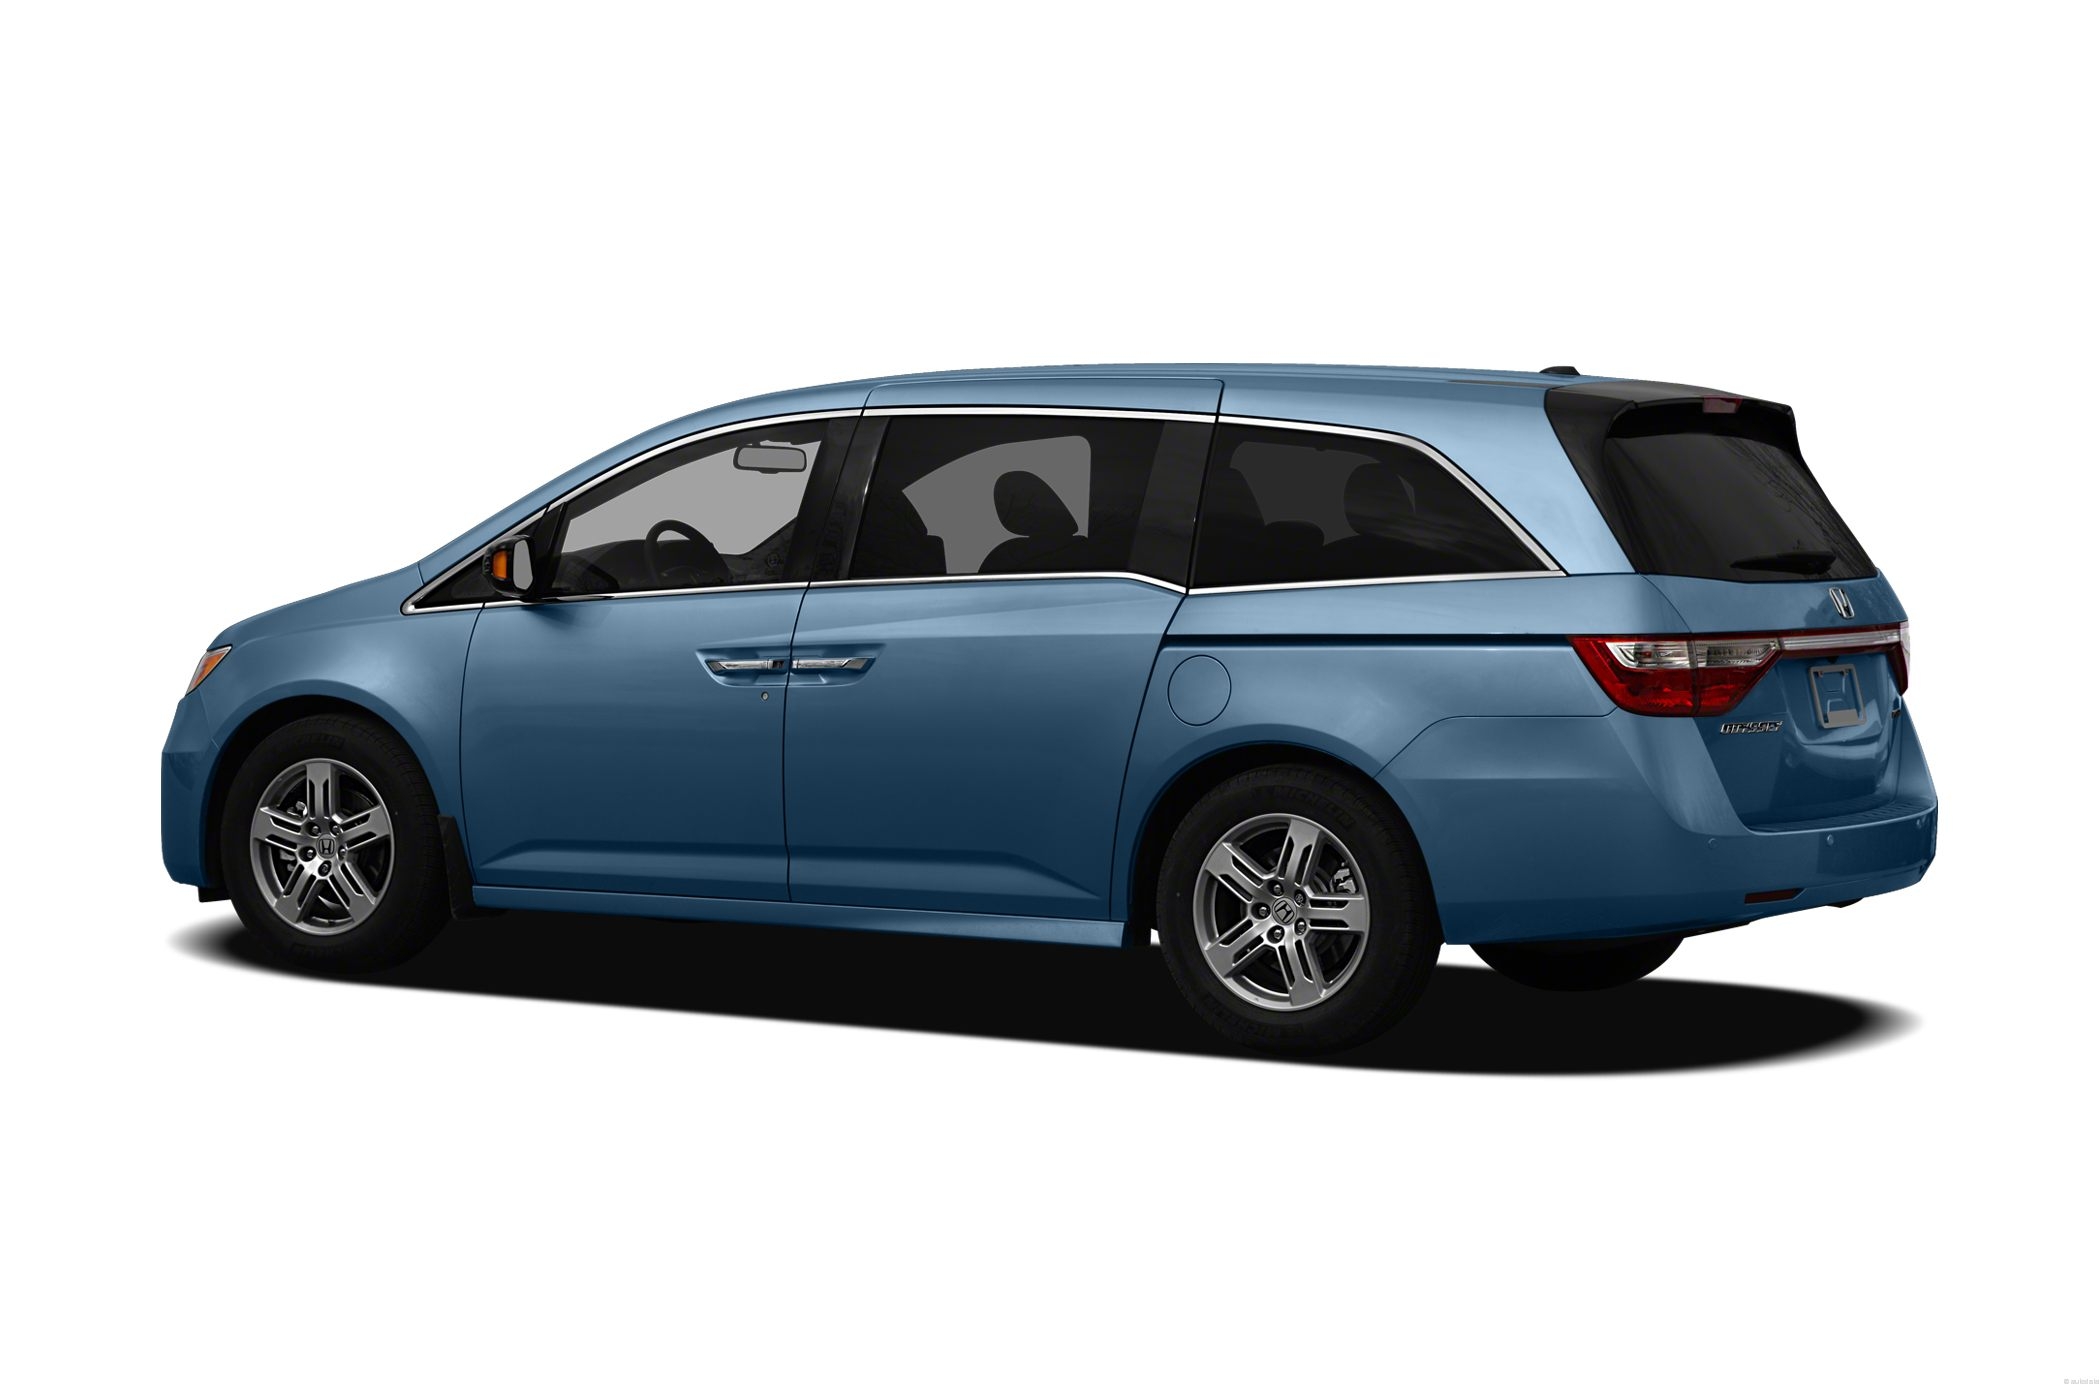 2014 Honda Odyssey Invoice Price * Invoice Template Ideas